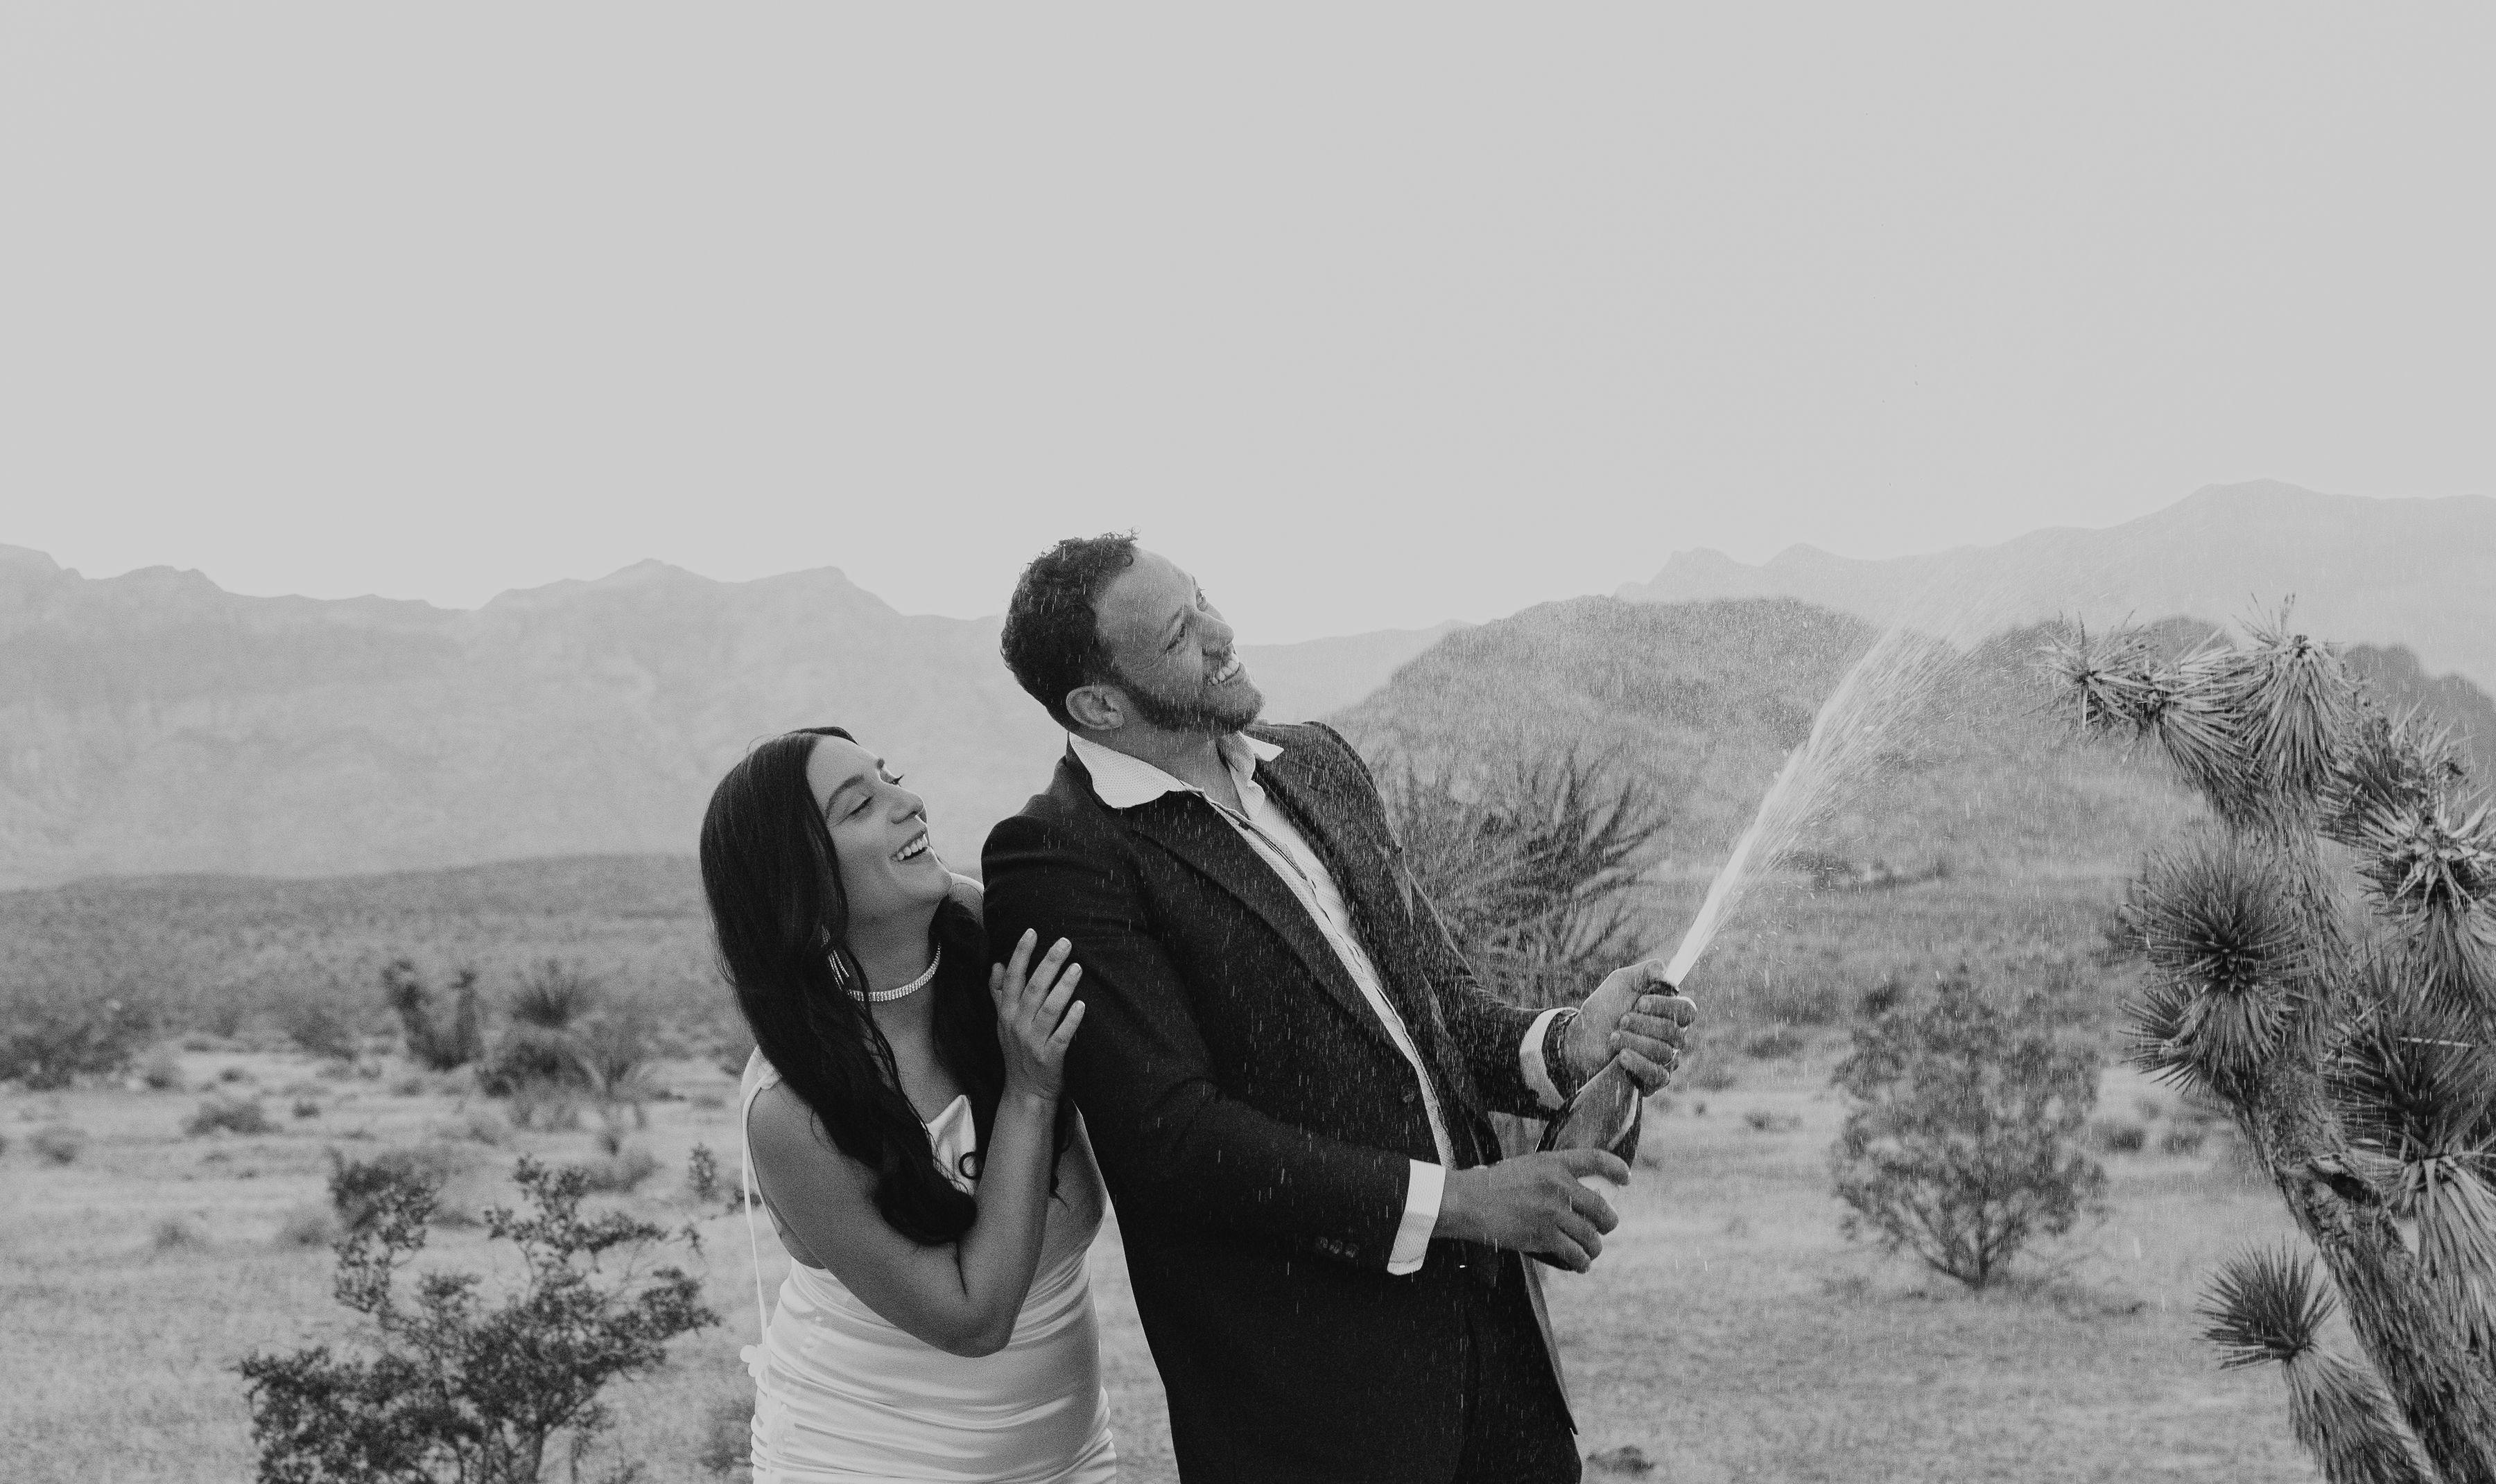 The Wedding Website of Jarid Price and Jennifer Ramirez